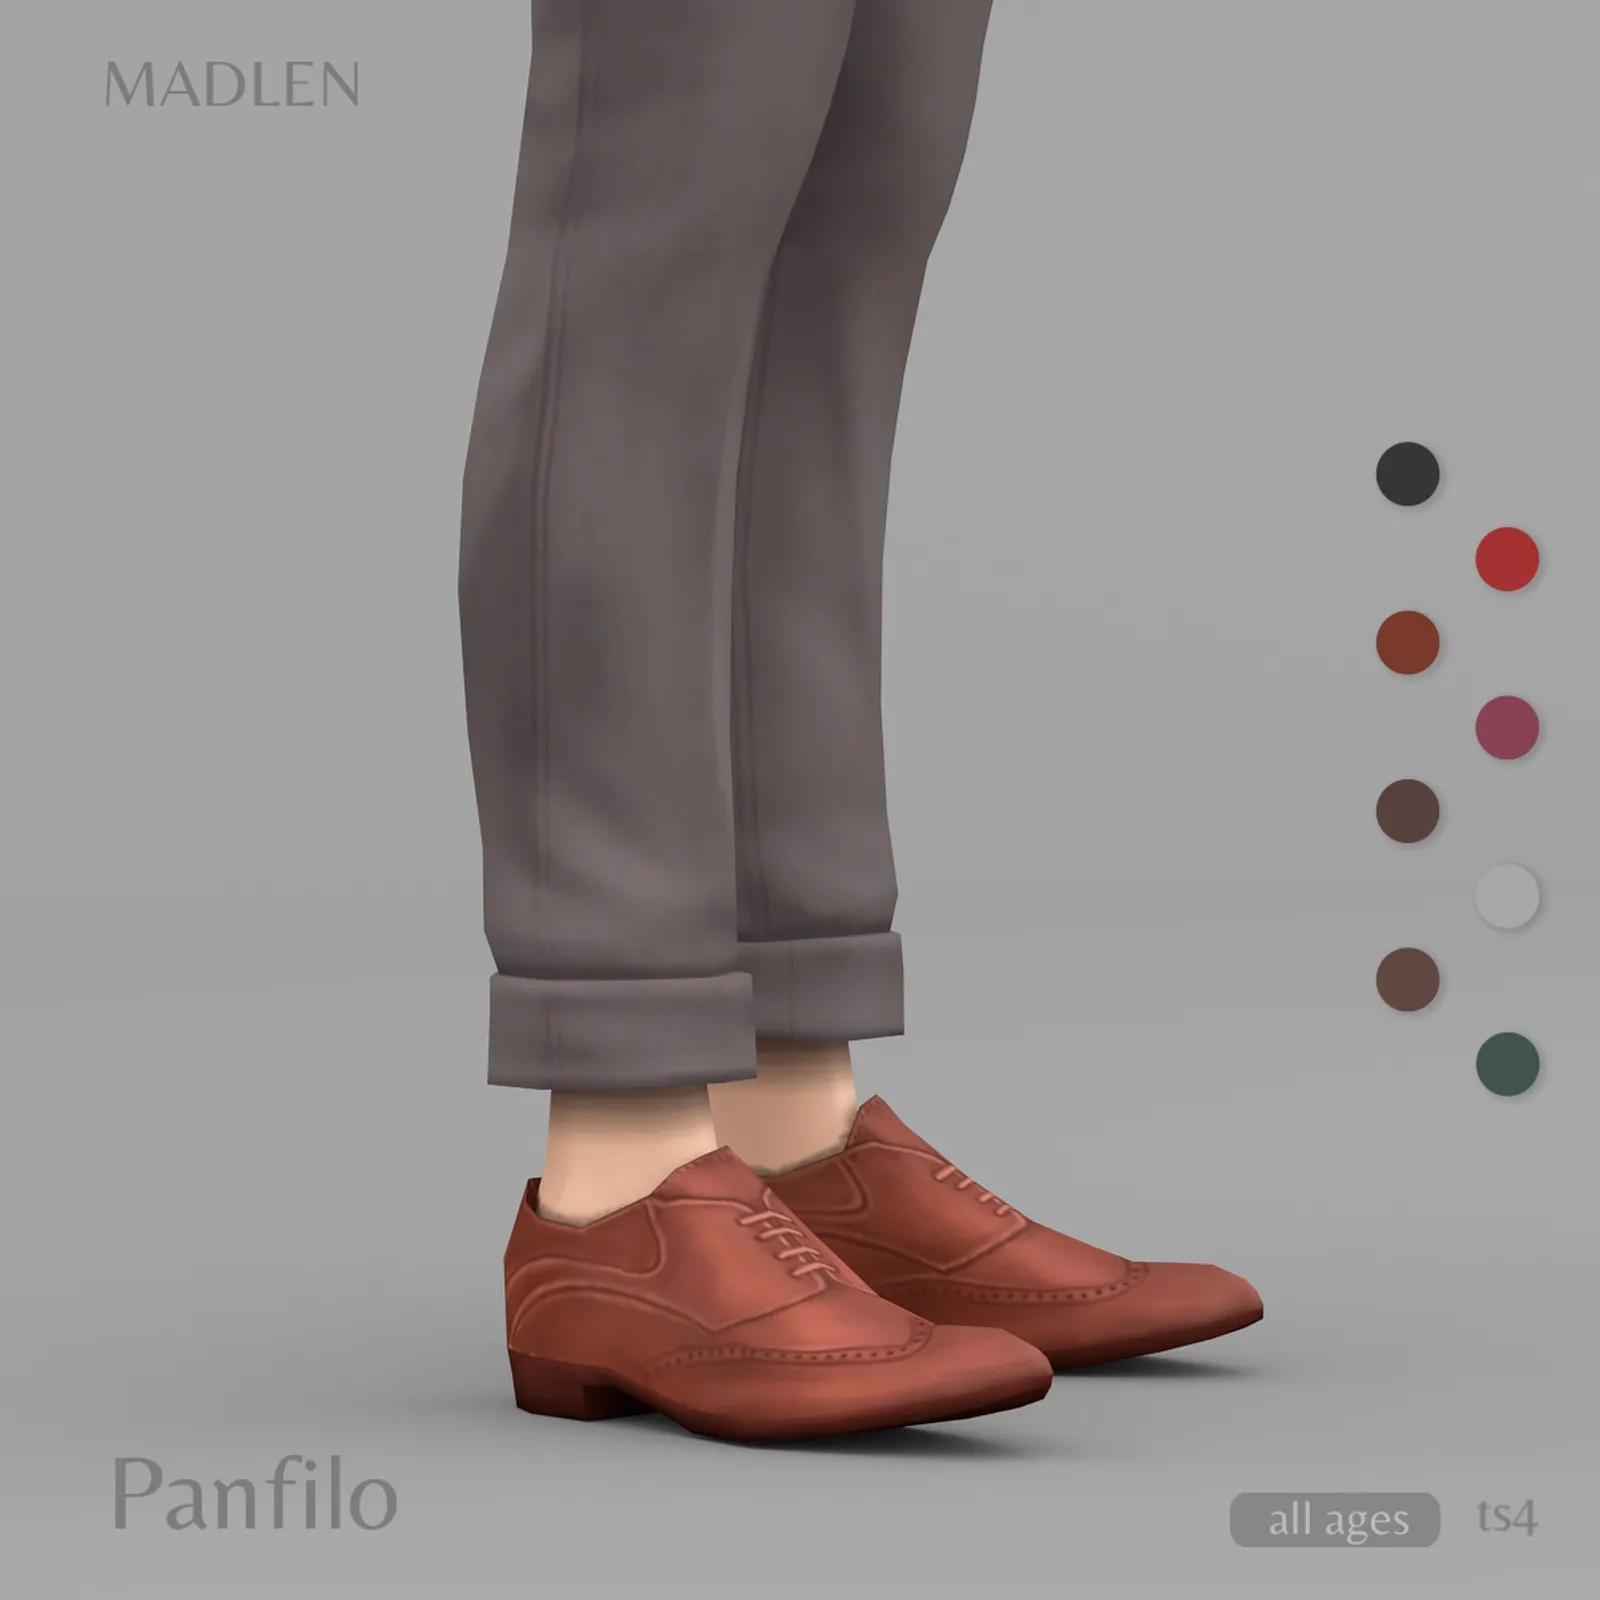 Panfilo Shoes